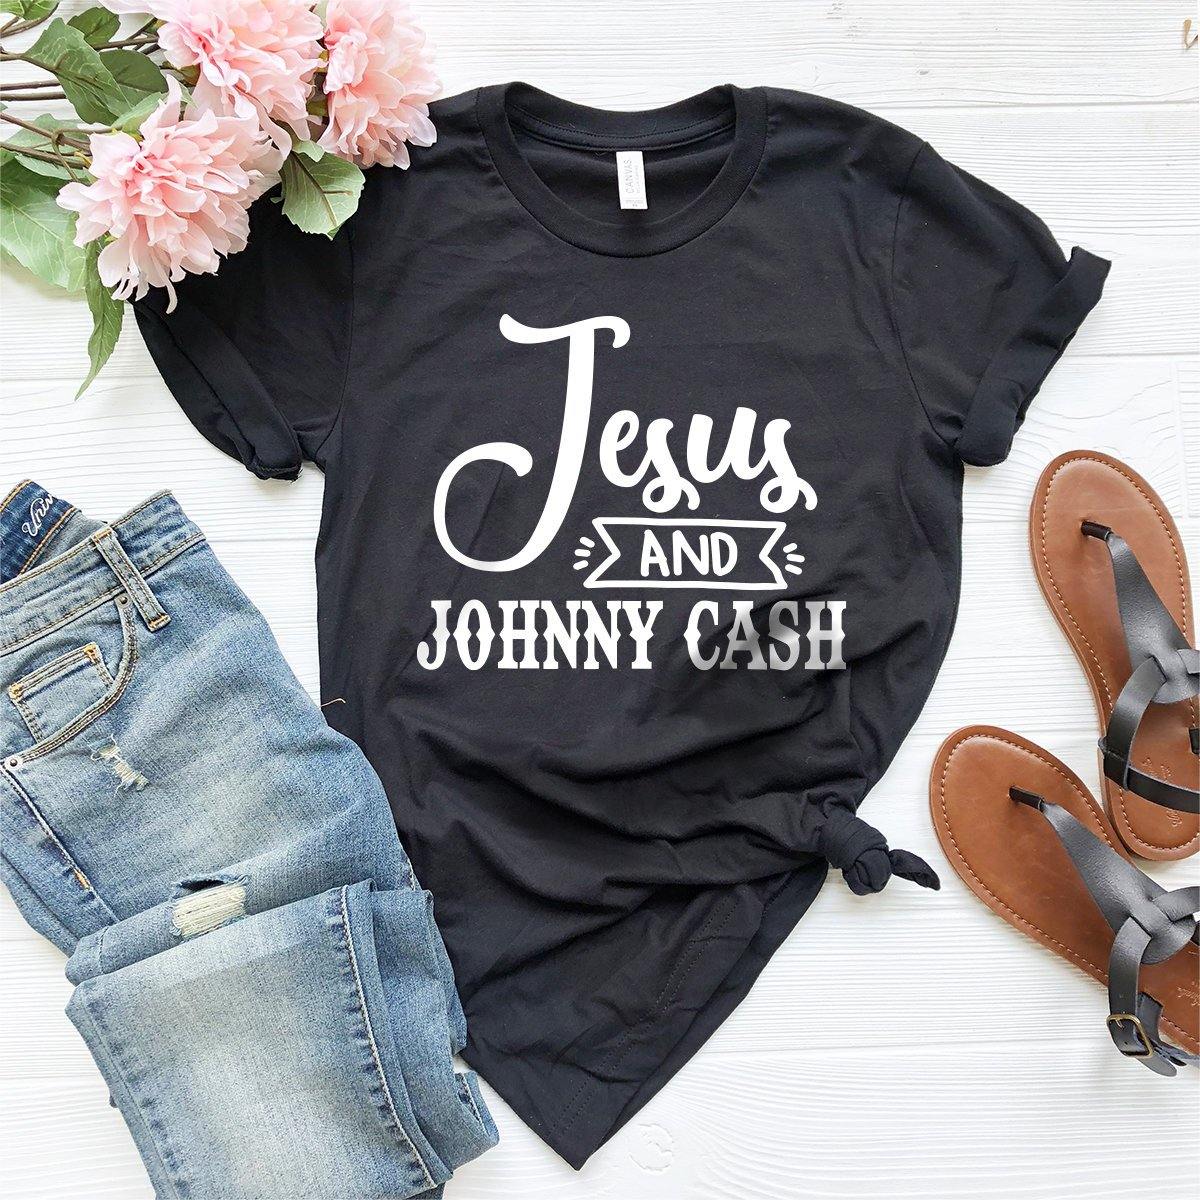 Country Music Shirt, Country Girl Shirt, Jesus Shirt, Western Shirt, Country Concert Shirt, Southern Girl Shirt,Cow Girl Shirt, Cowboy Tee - Fastdeliverytees.com